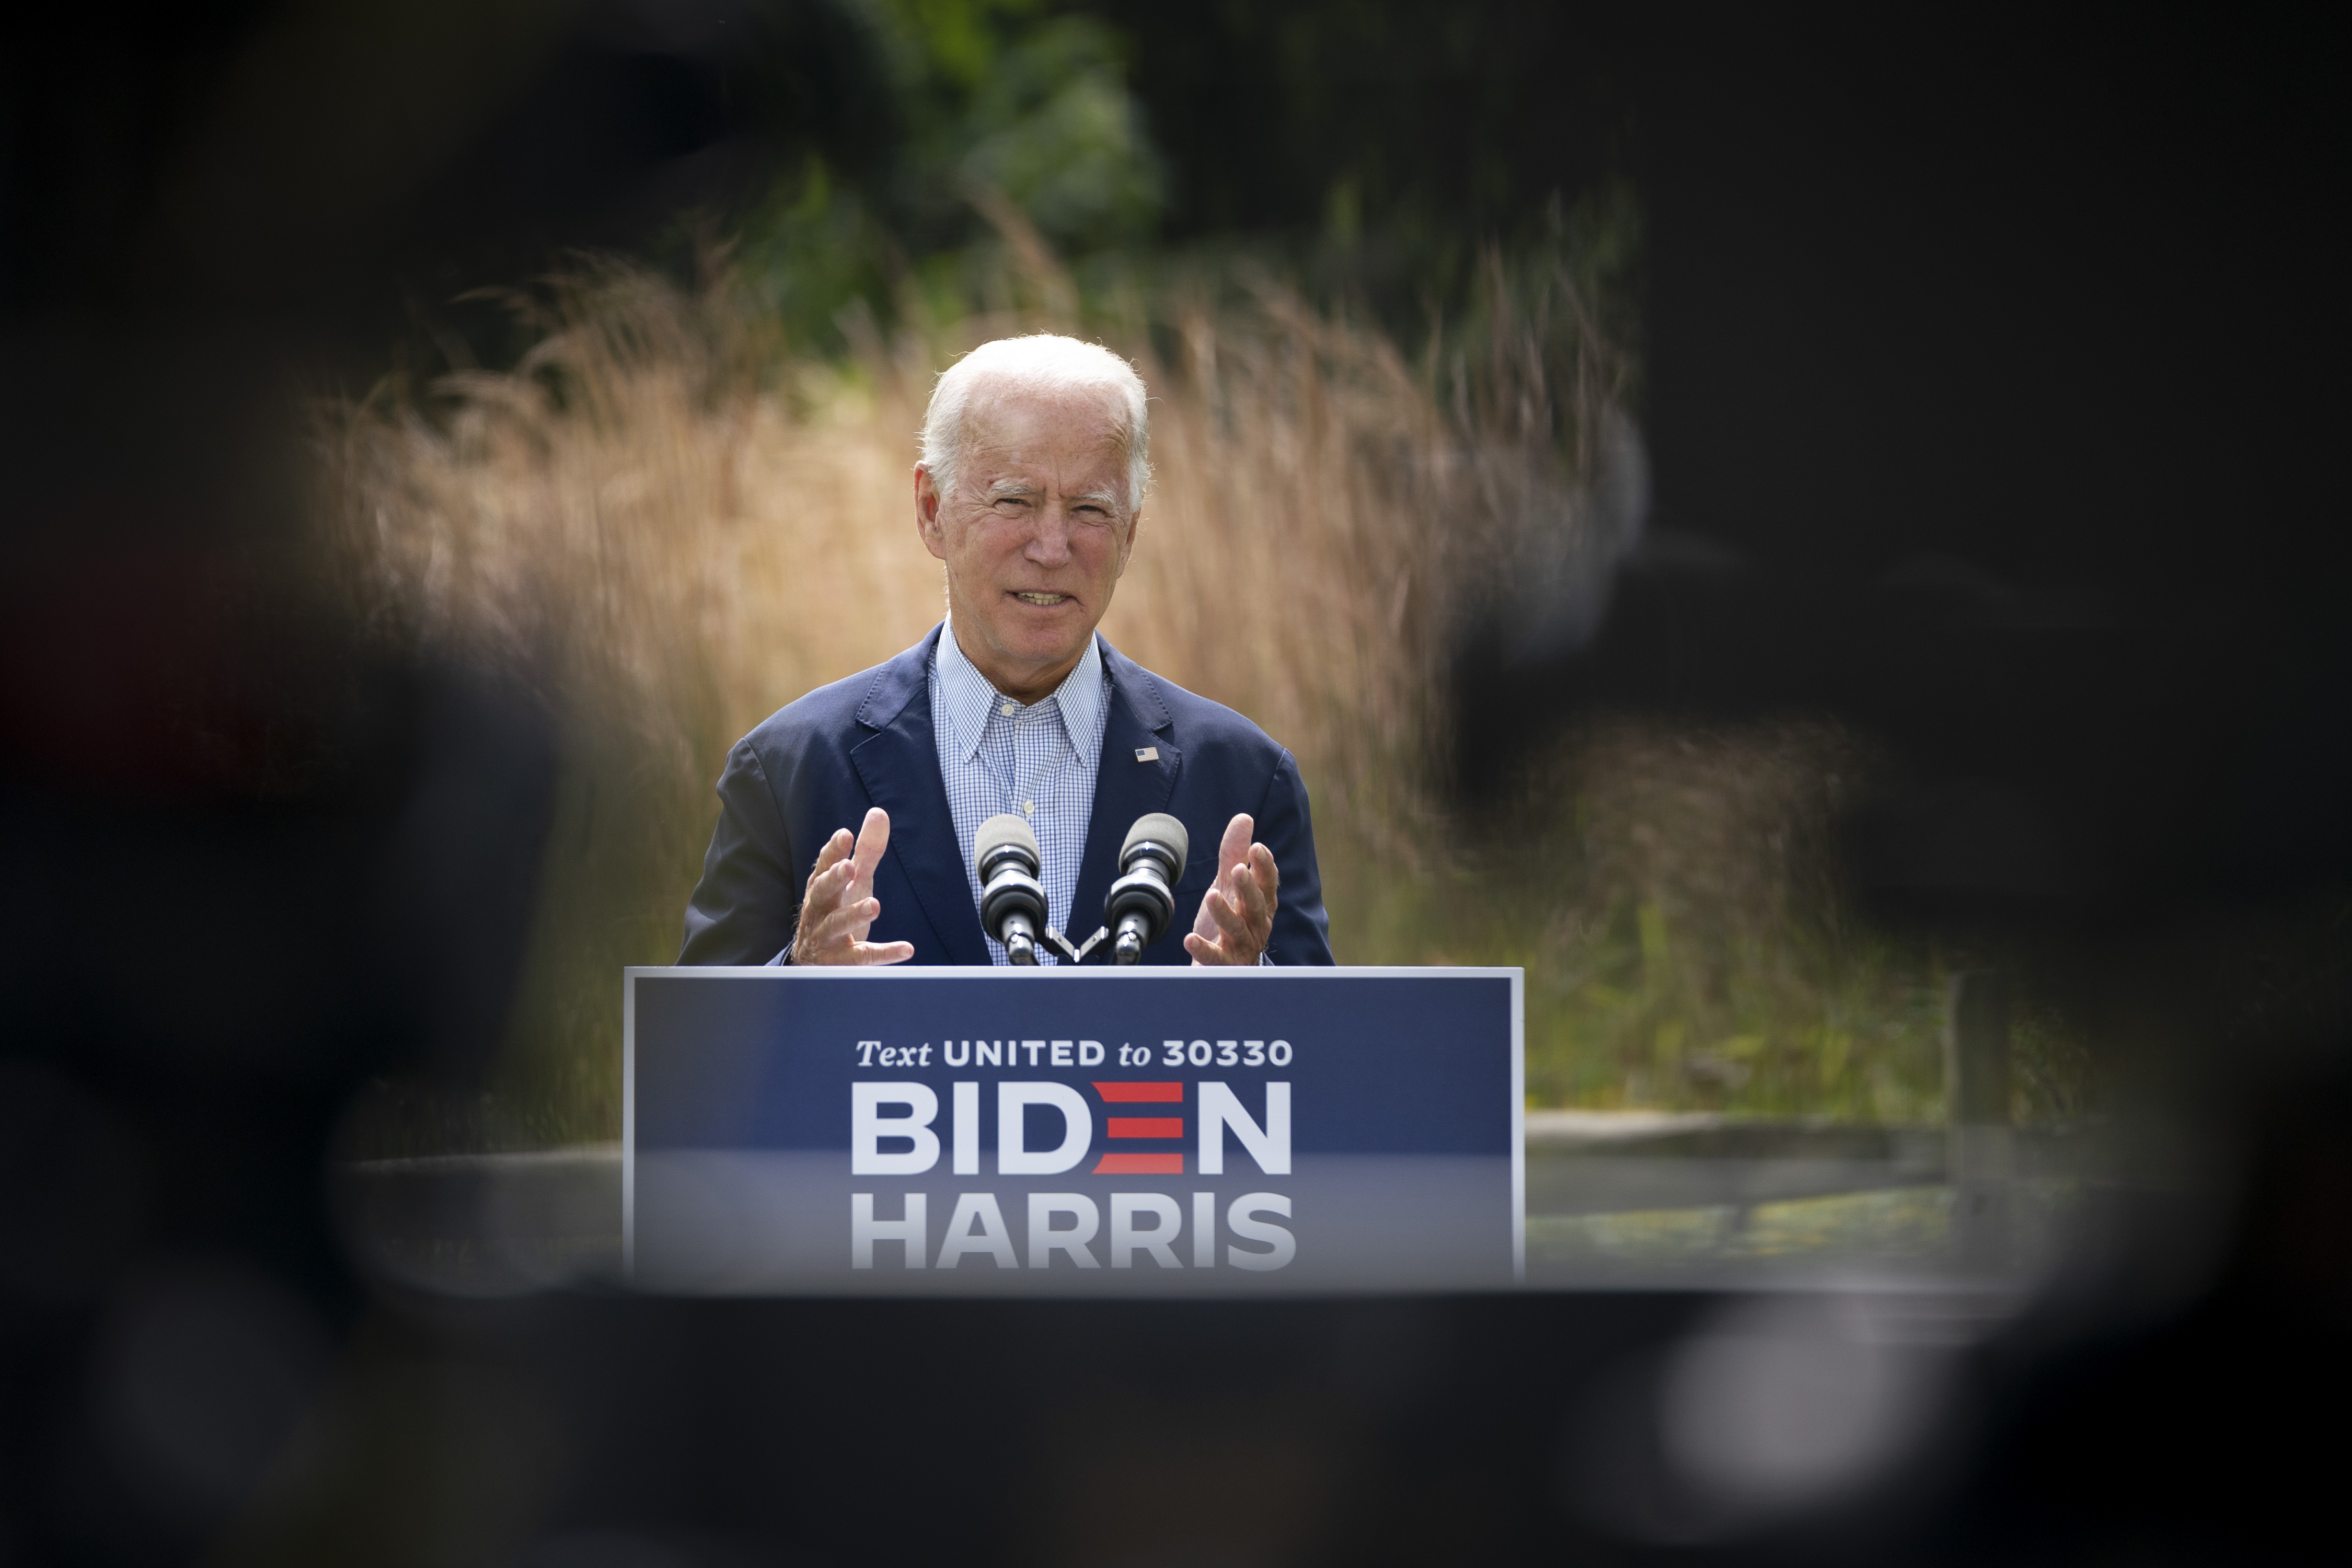 Man wearing suit stands behind podium reading “Biden/Harris” in a field.